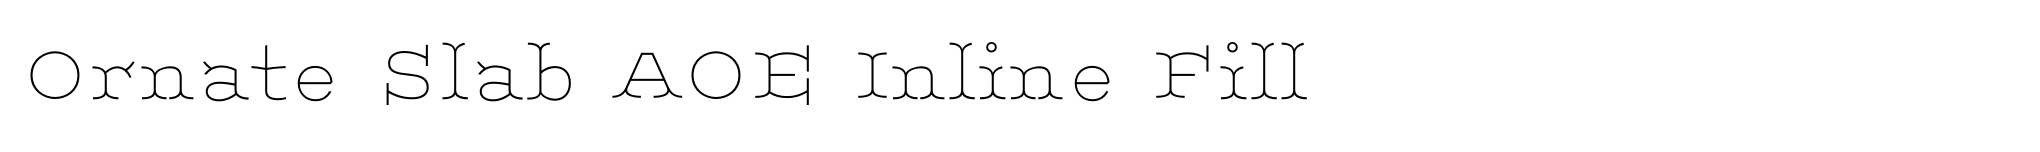 Ornate Slab AOE Inline Fill image